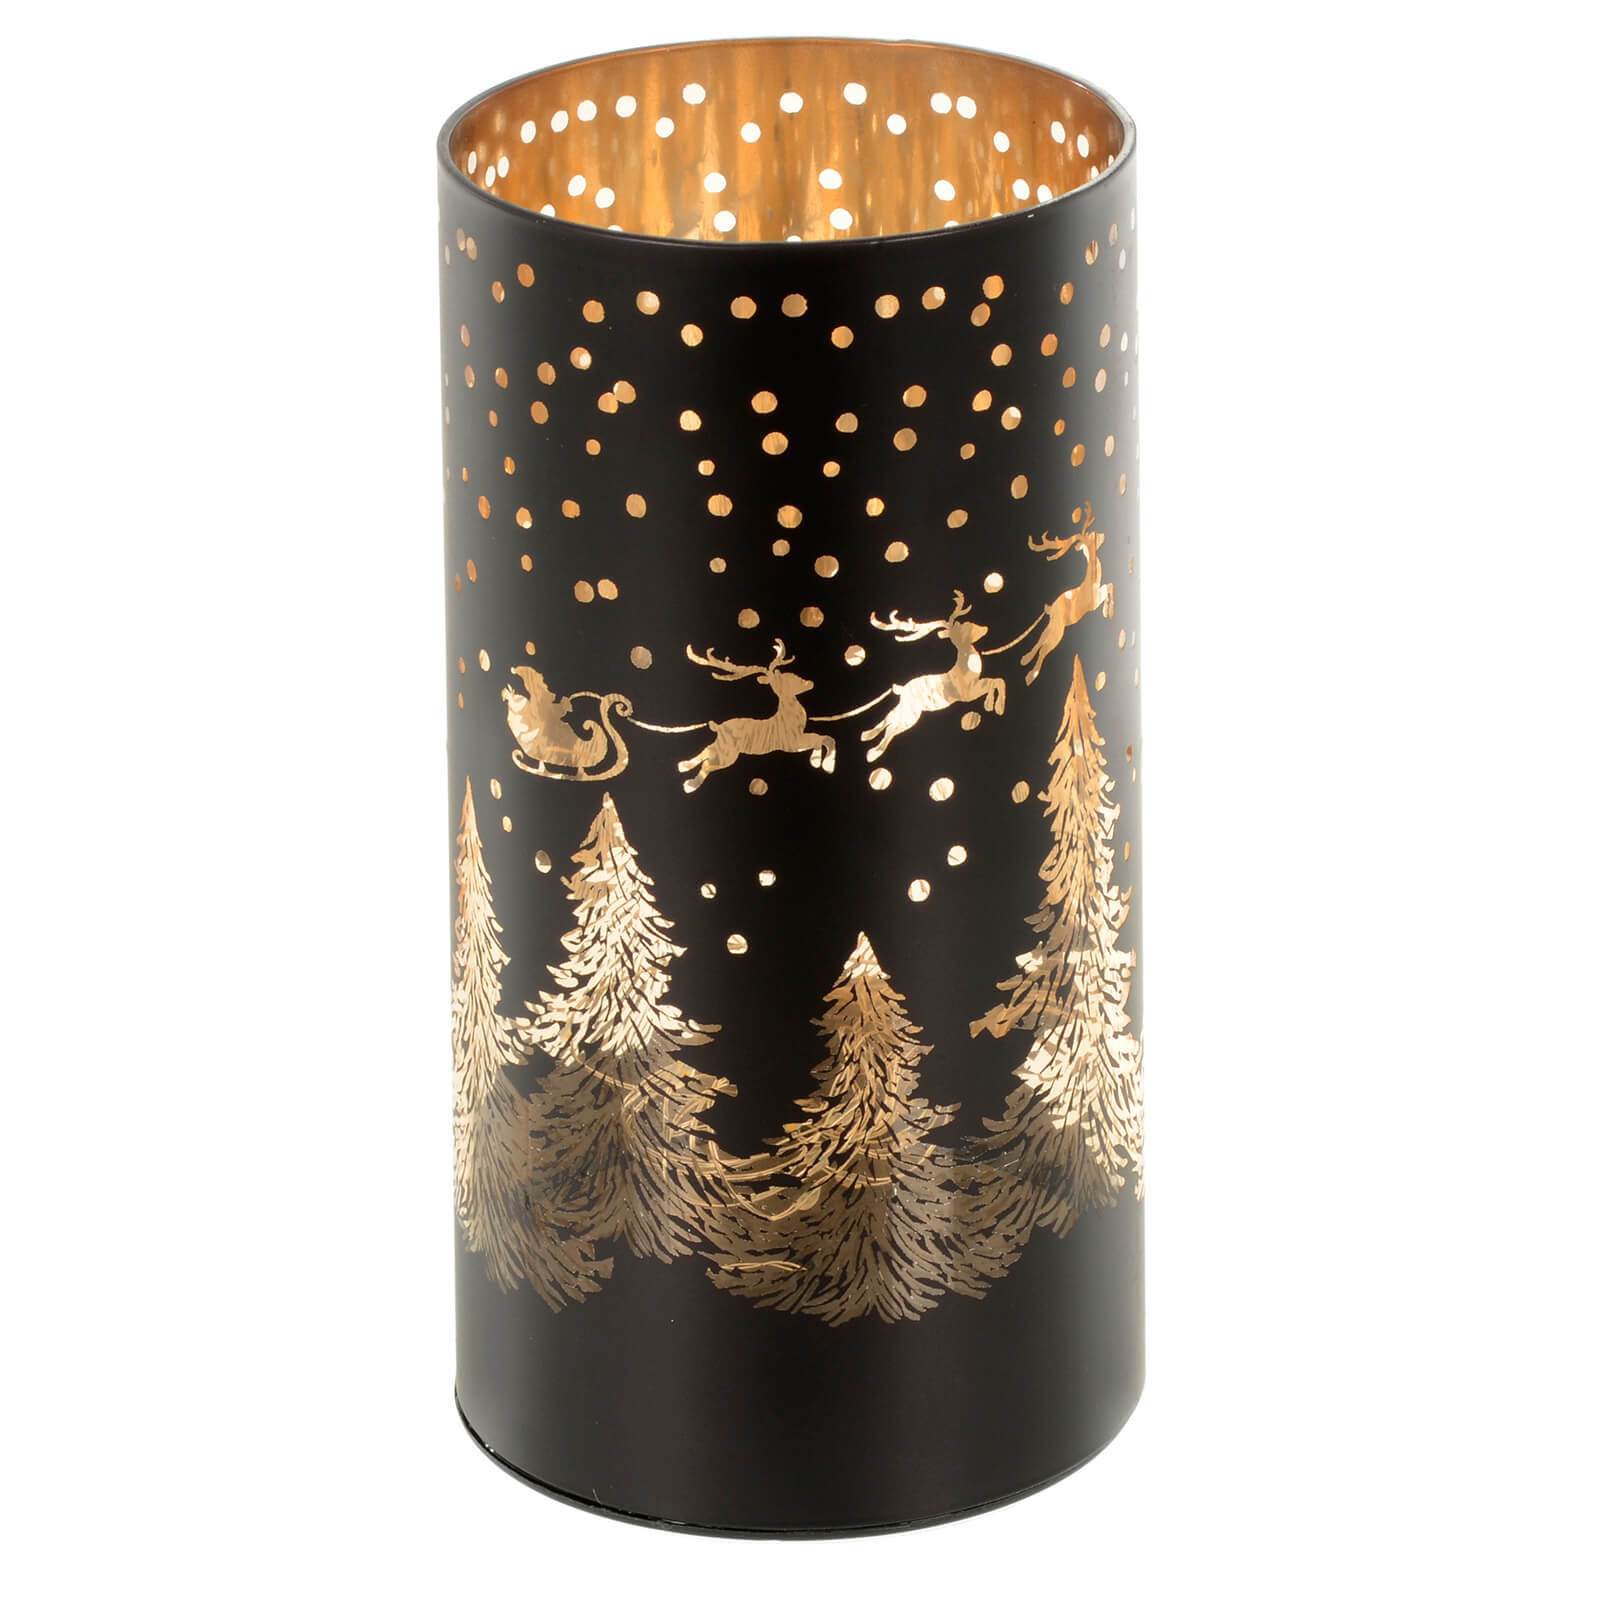 Mr Crimbo Christmas Cylinder Light Black Gold Decoration 20cm - MrCrimbo.co.uk -XS7293 - Tree Scene & Deer -Black